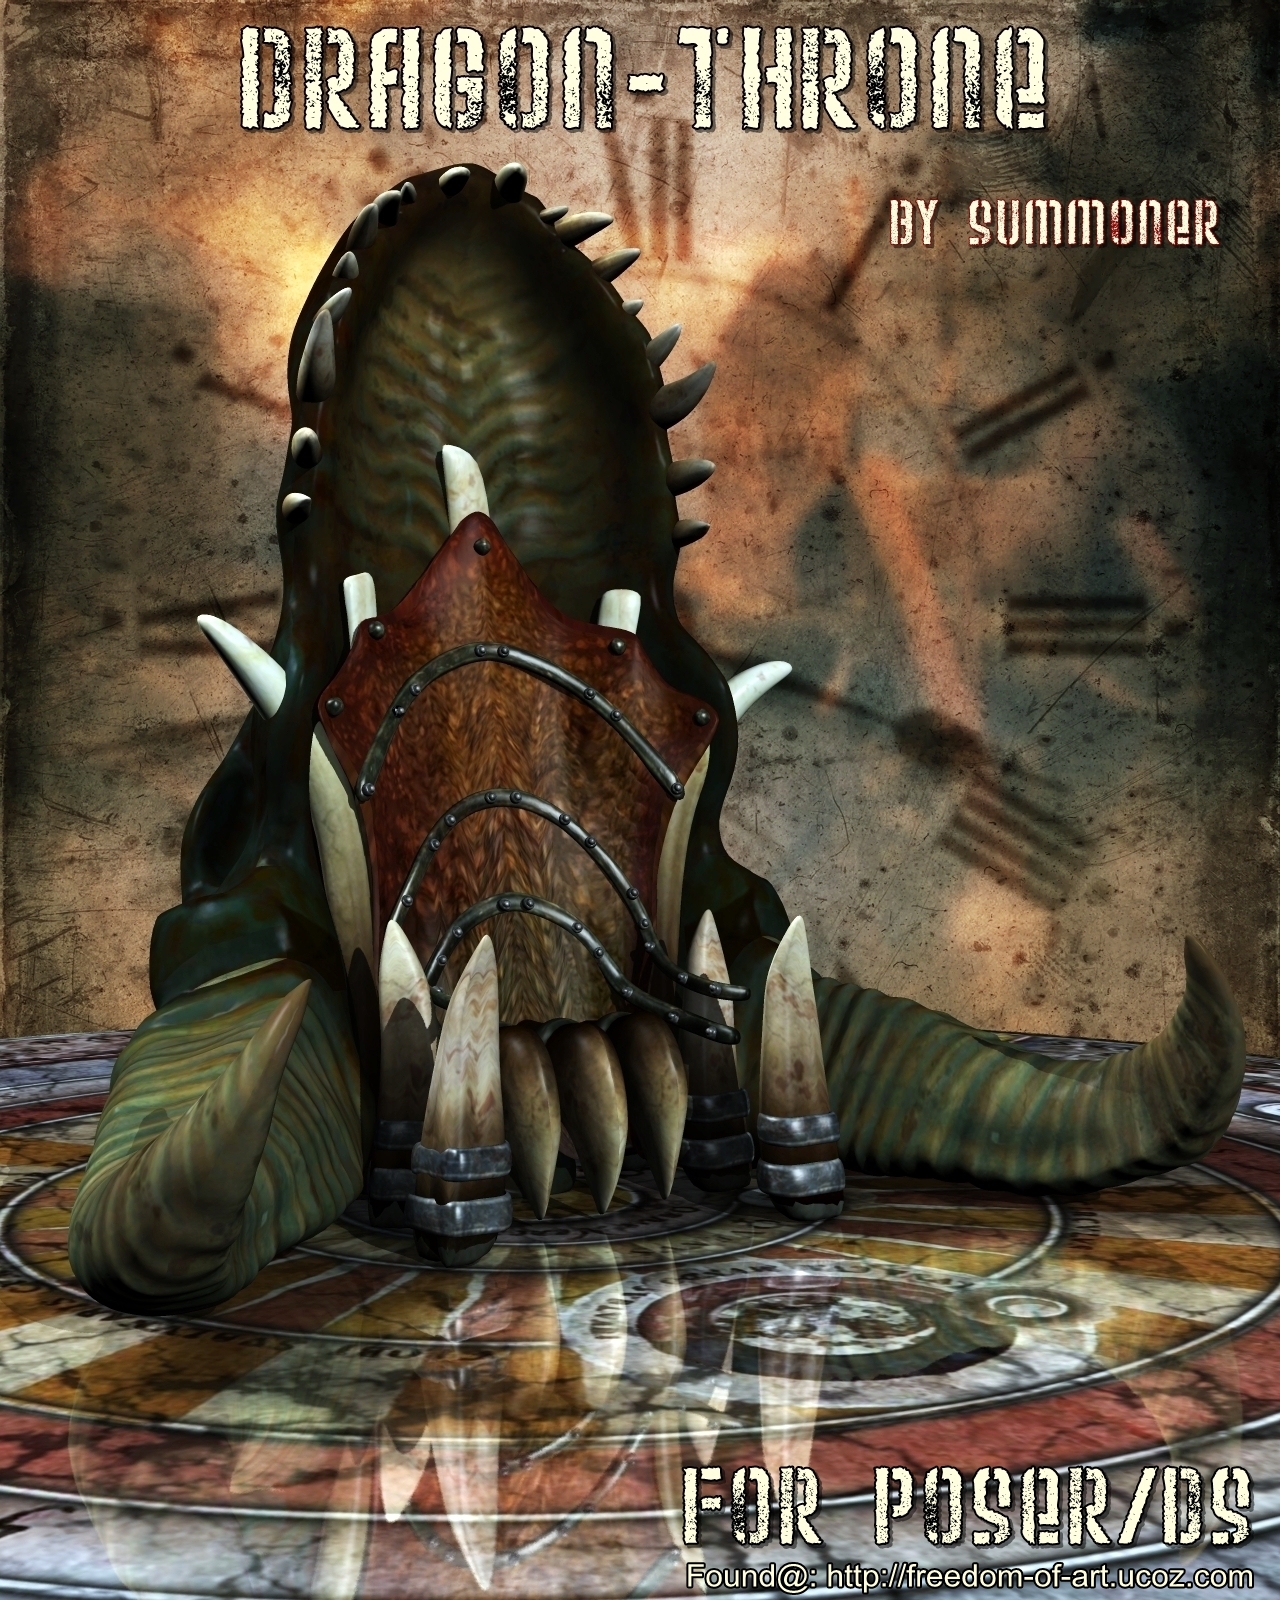 Summoner’s Dragon-Throne